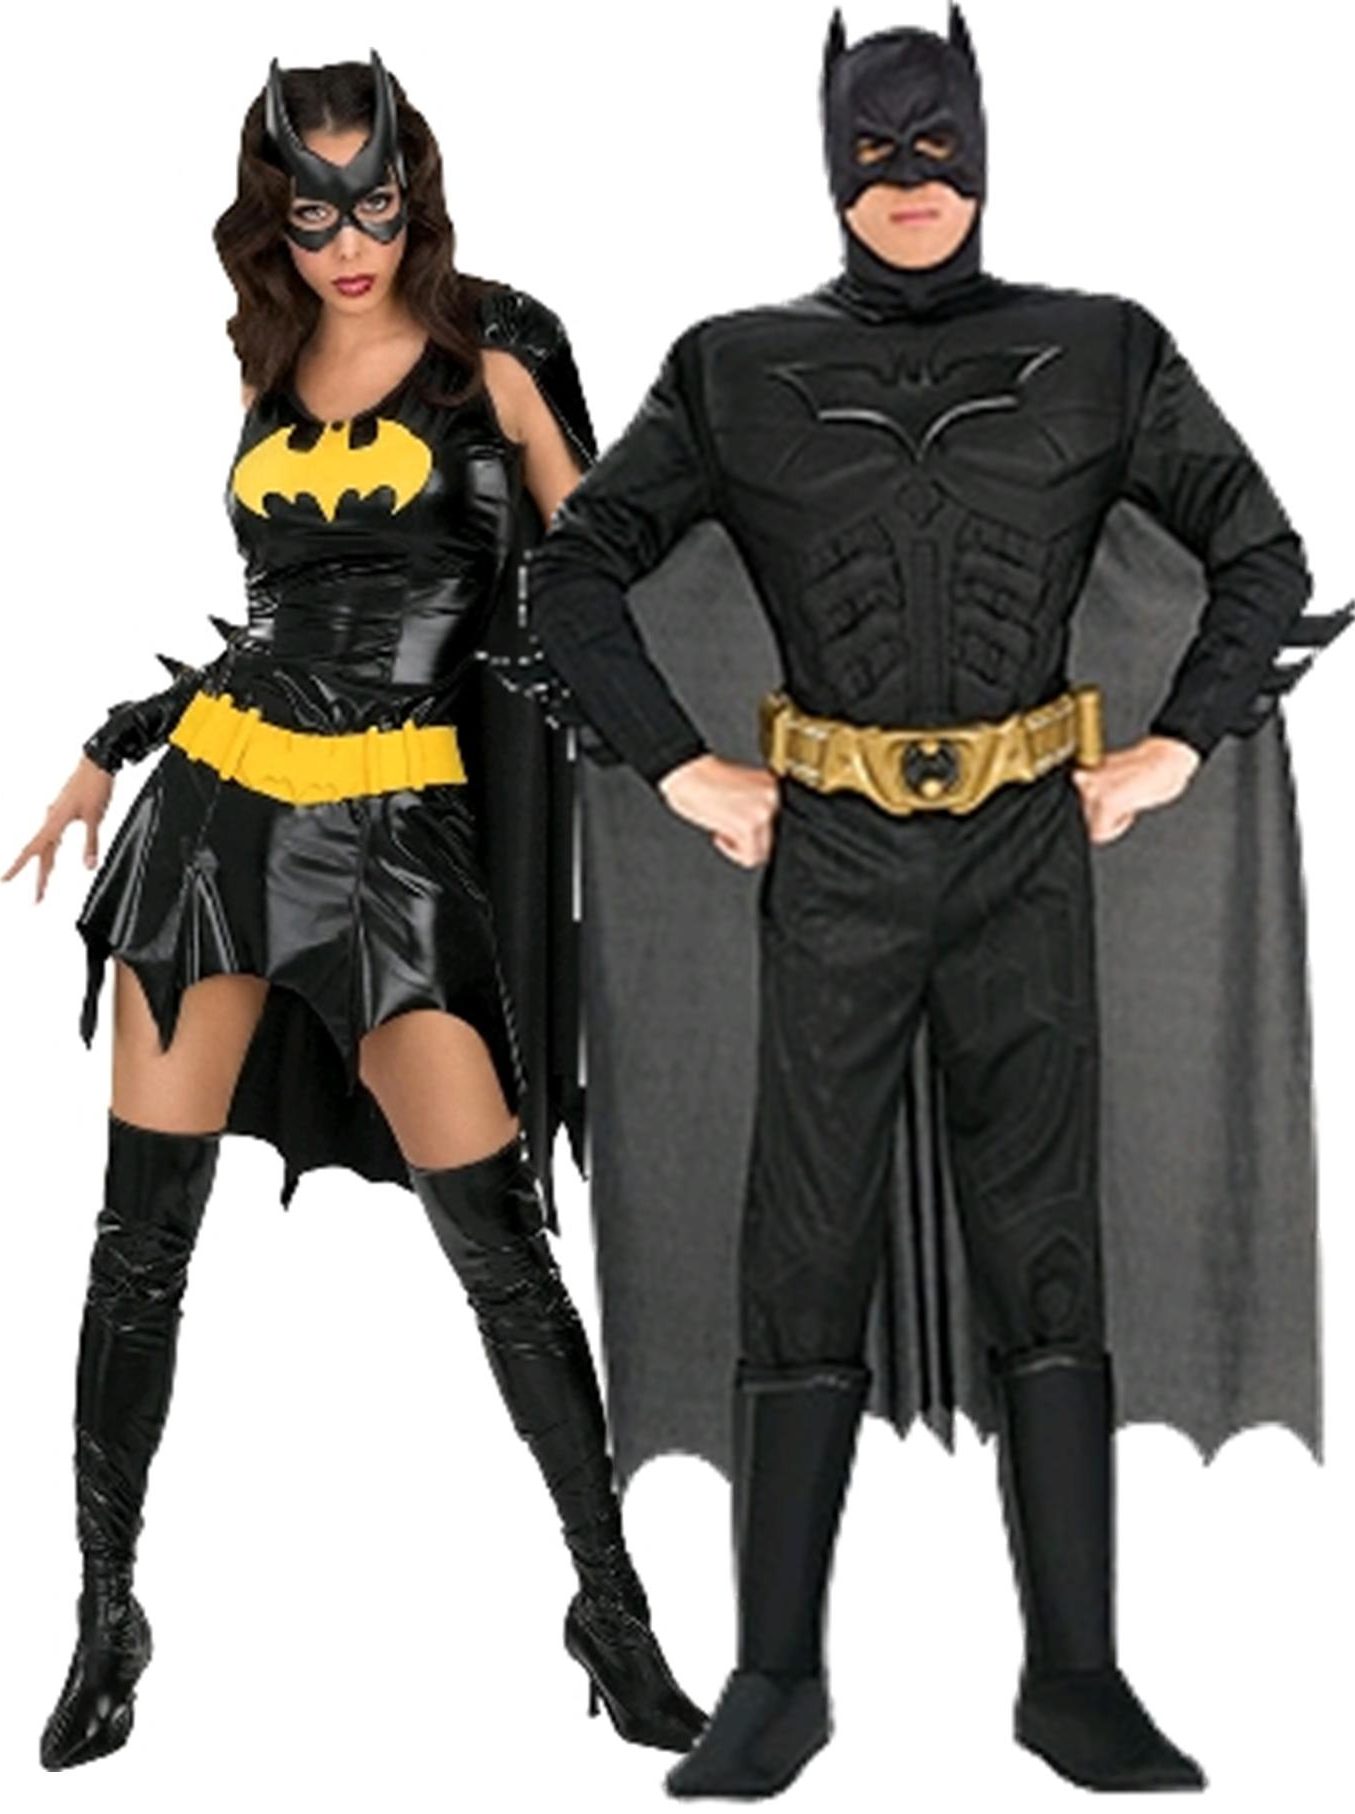 Batman & Batgirl Costumes - Hire or Buy - Acting the Part